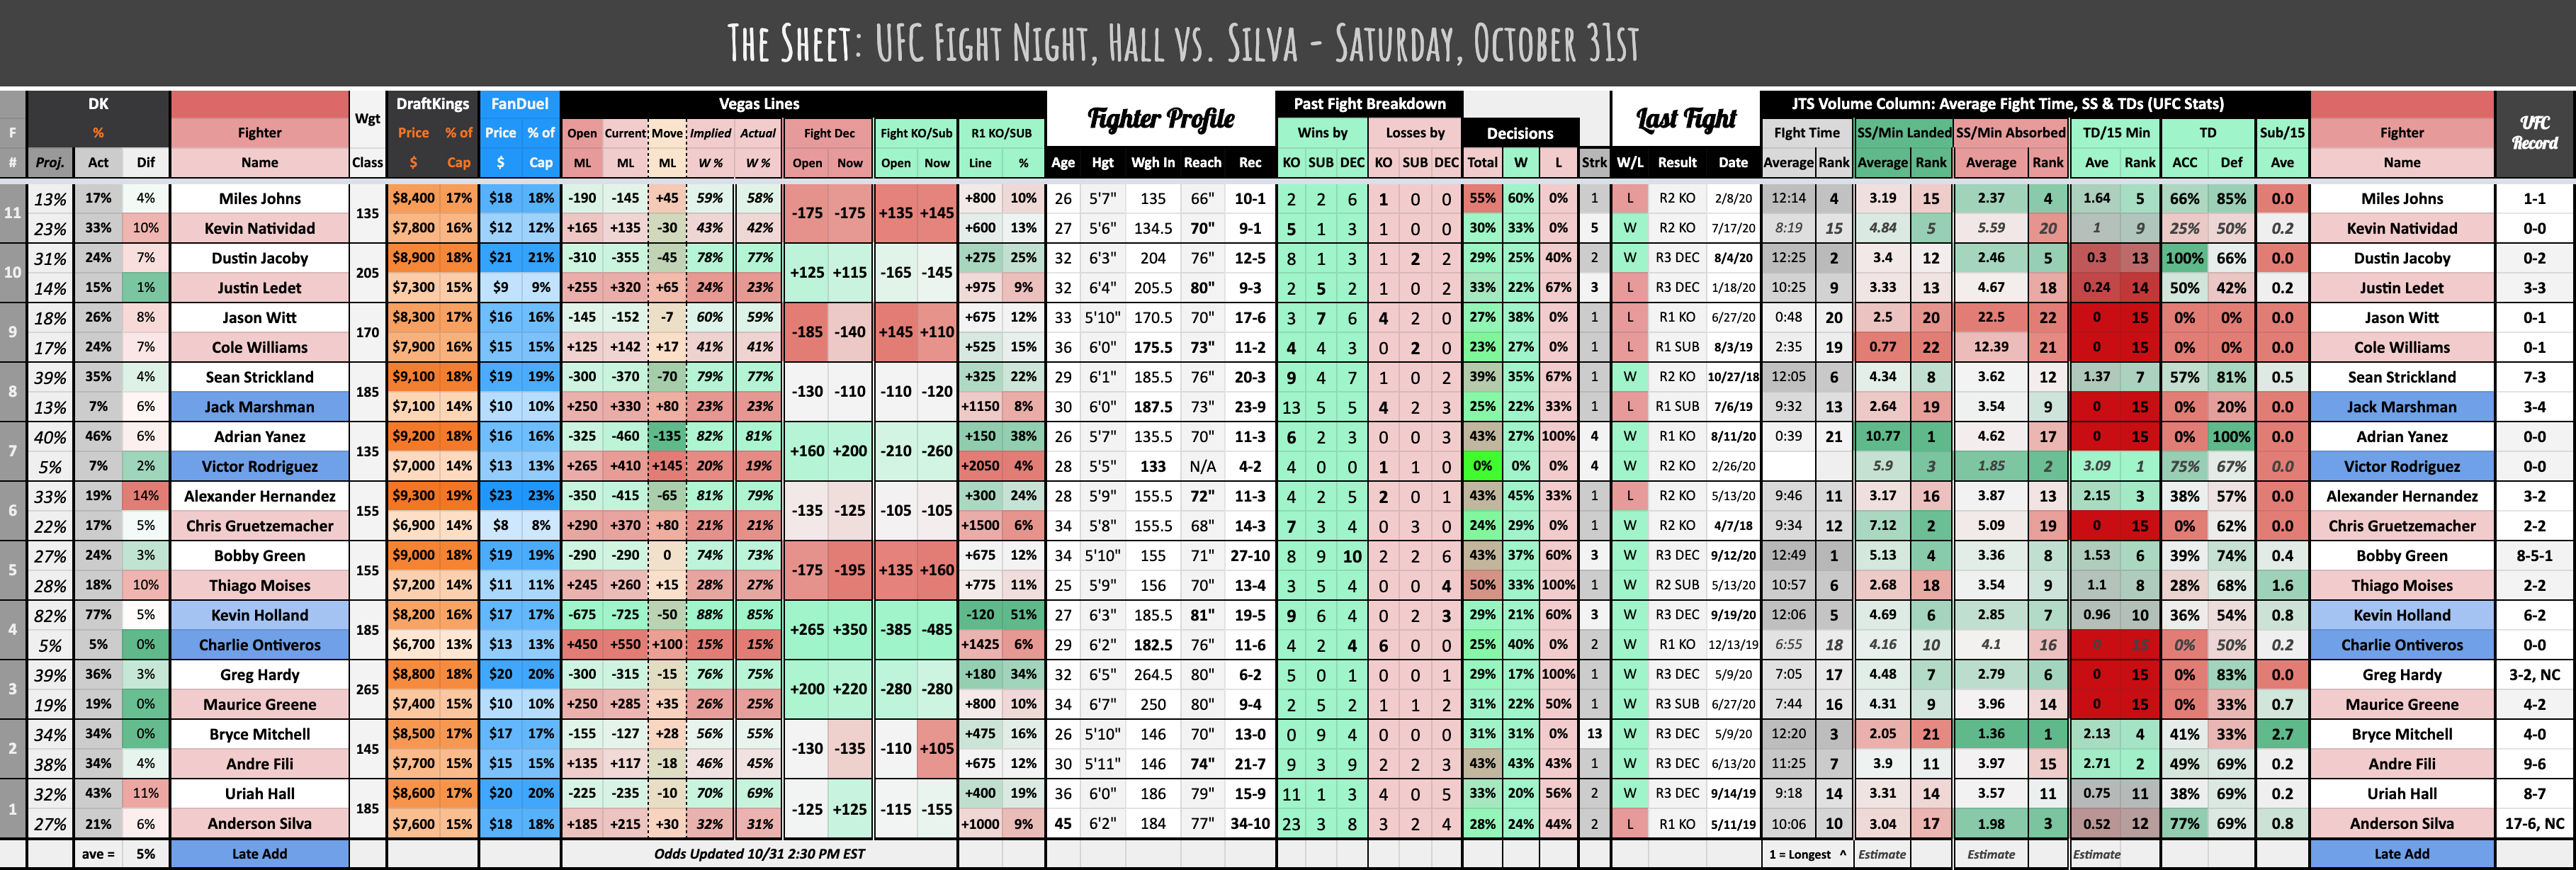 The Sheet: UFC Fight Night, Hall vs. Silva - Saturday, October 31st